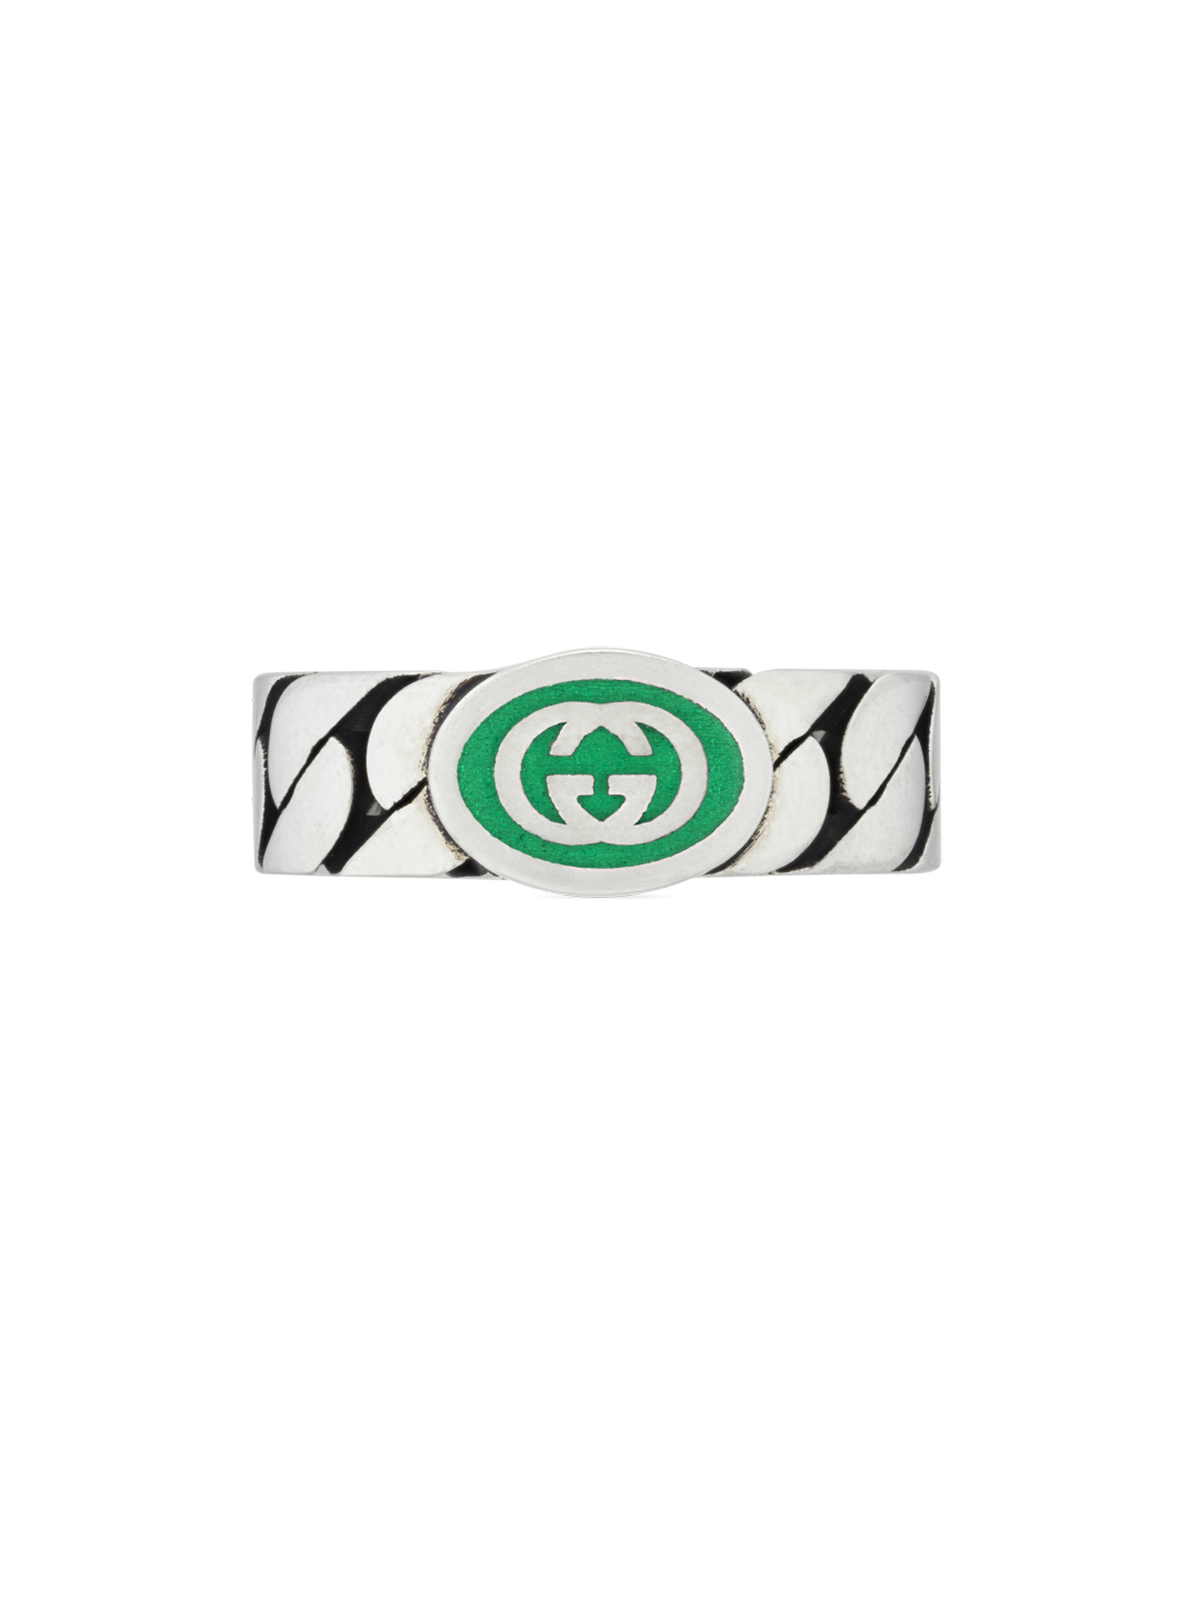 Gucci Interlocking Ring in Silver & Green Enamel - Size 14